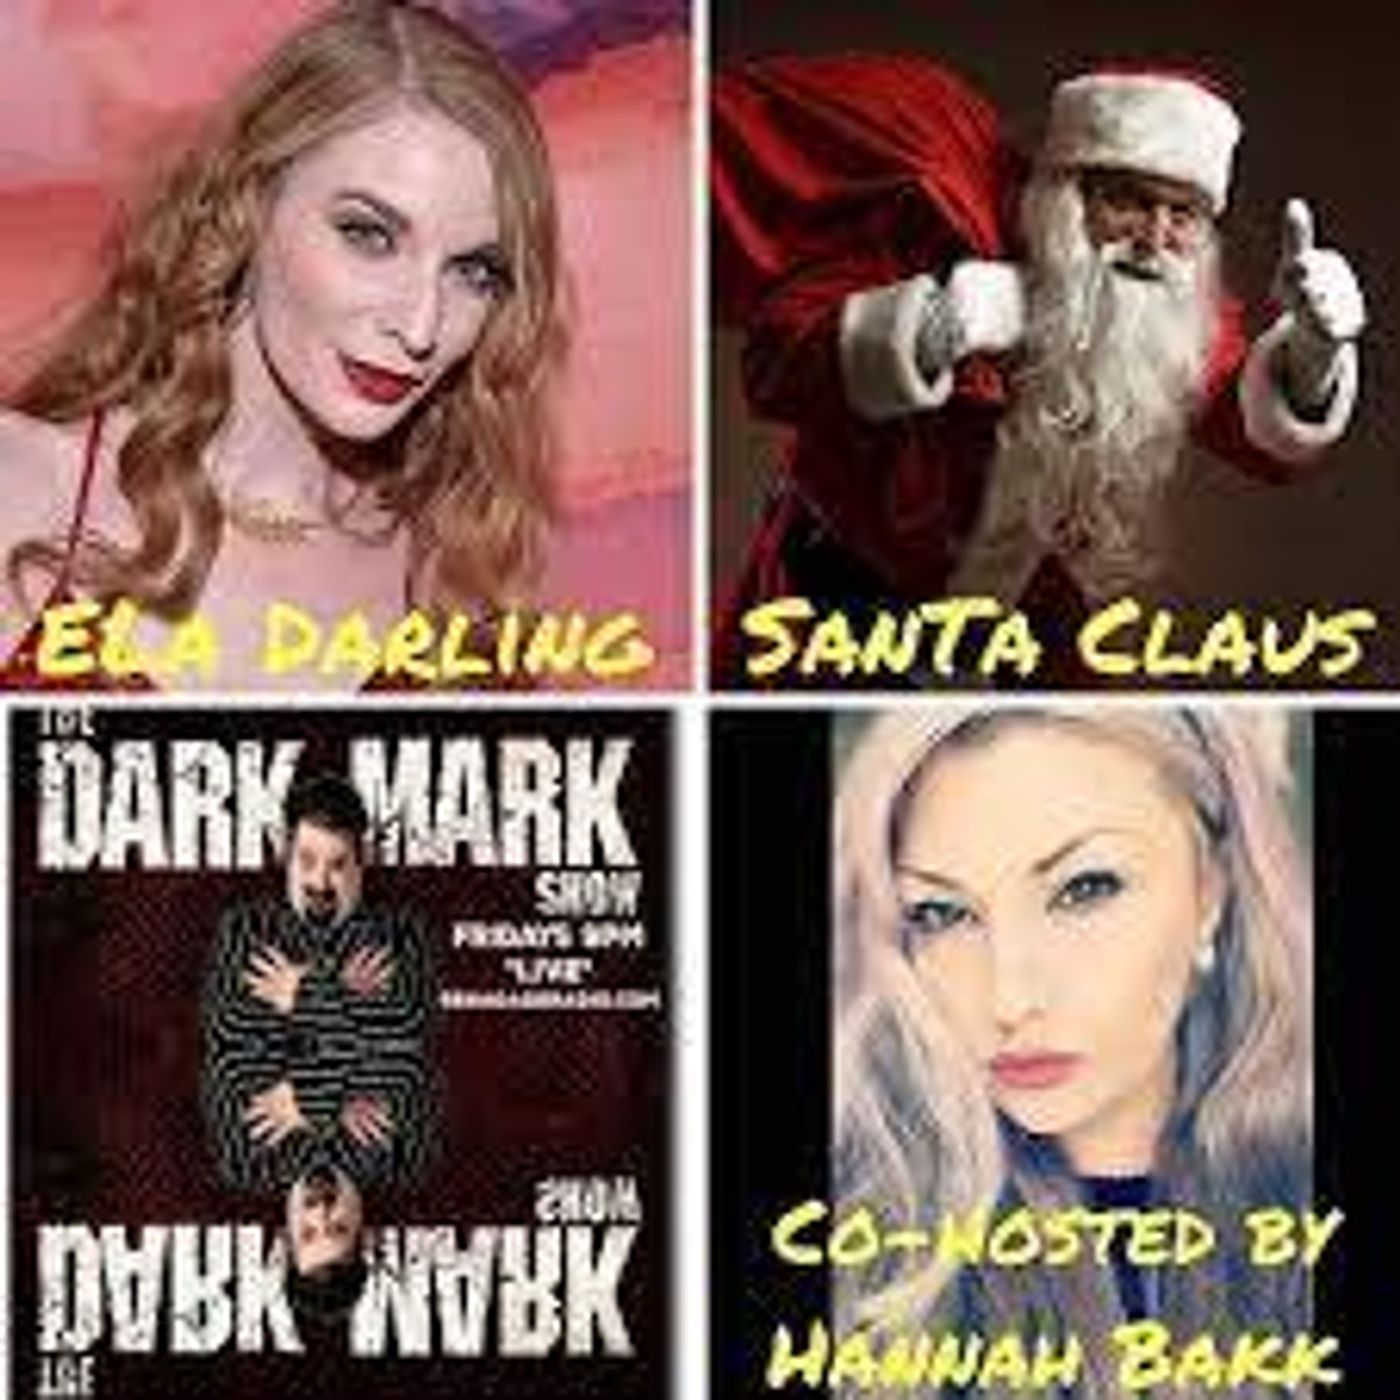 276: Christmas Memories with Ela Darling and Santa Claus